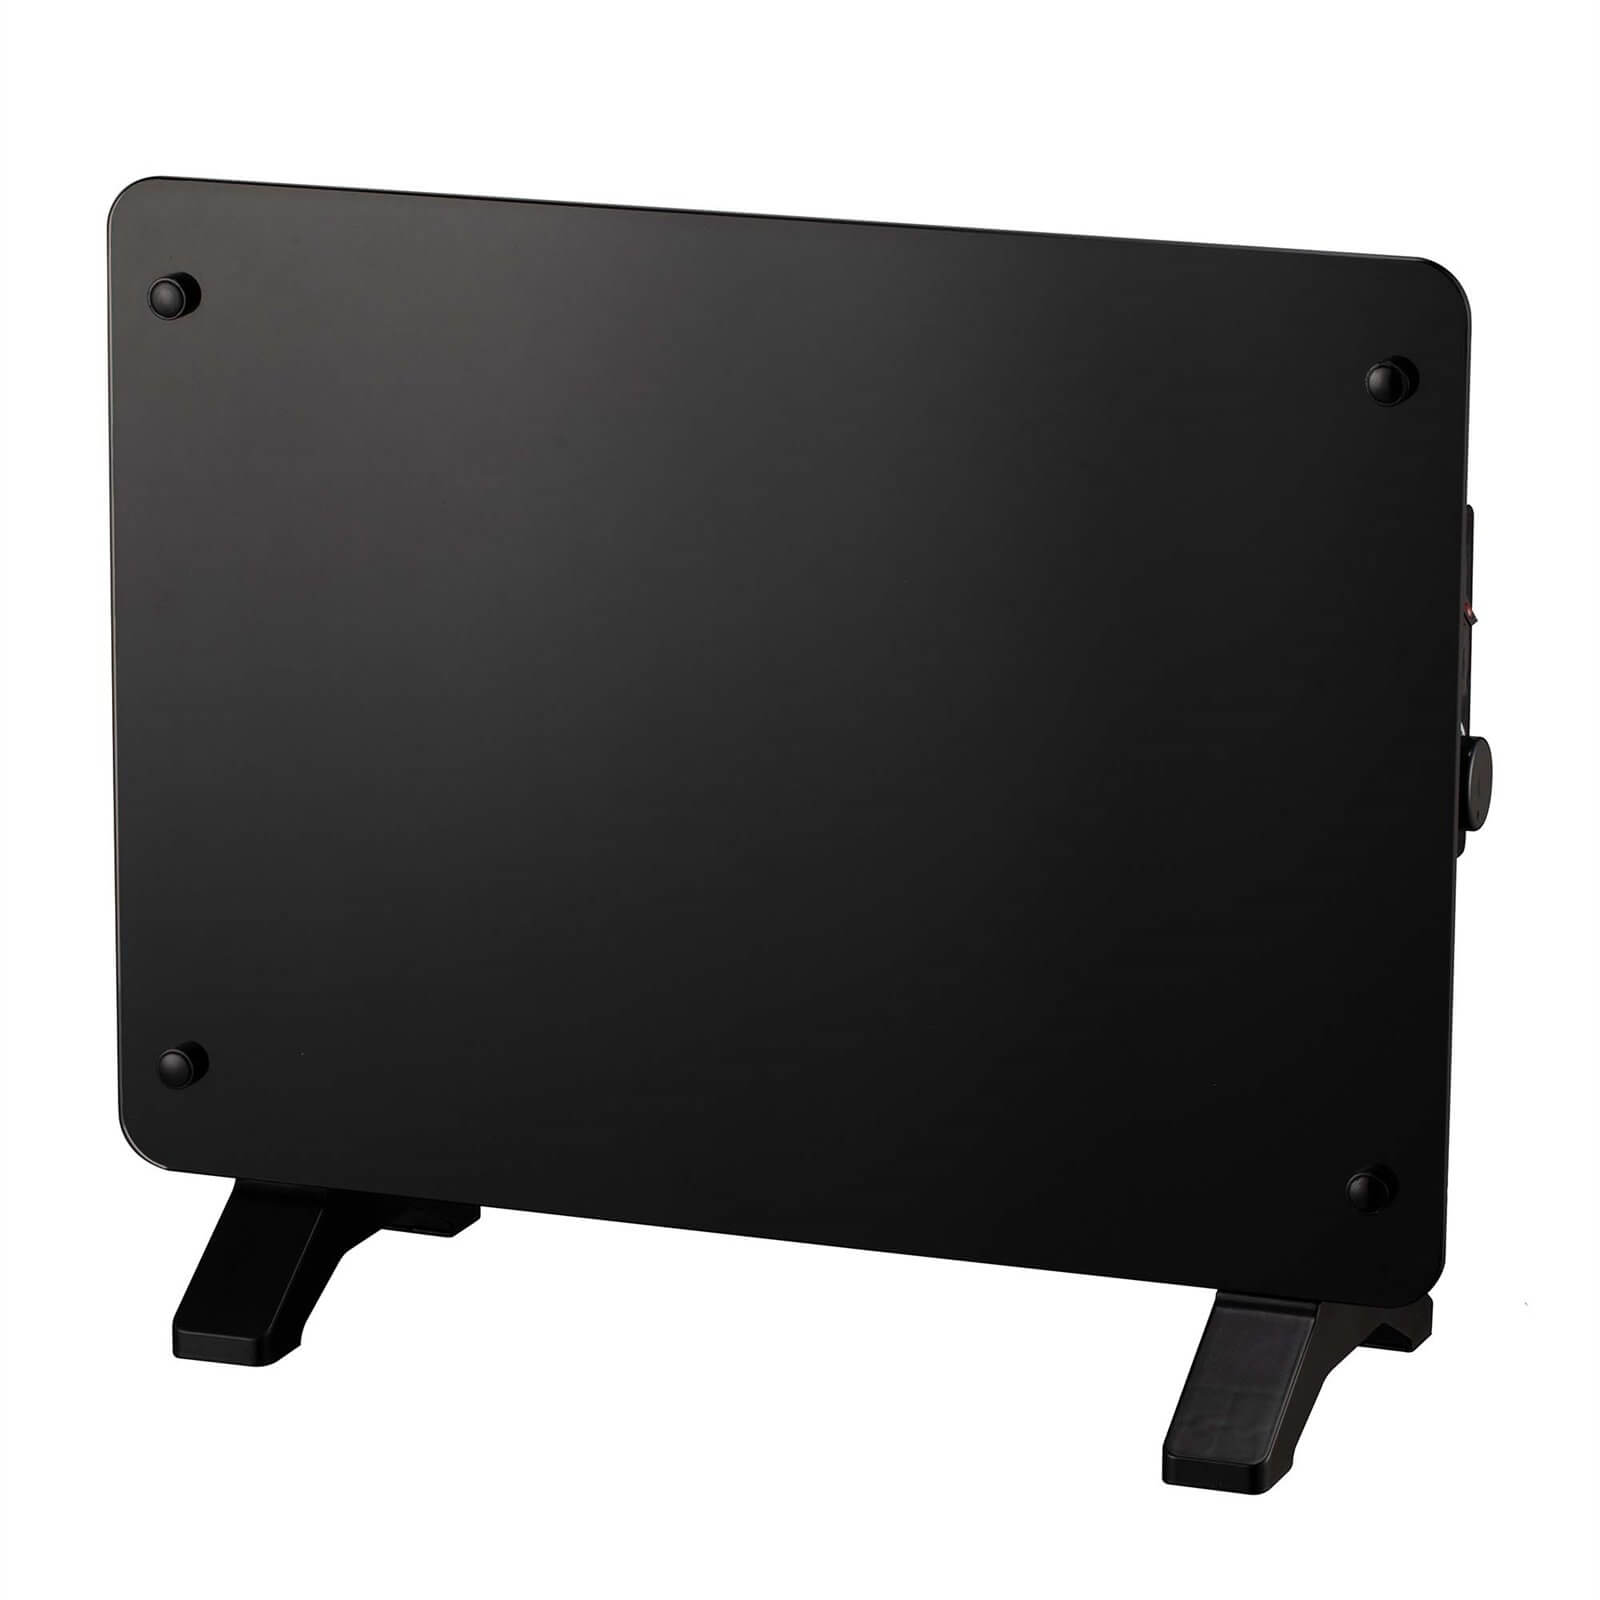 Stylec Electric Glass Panel Heater in Black - 2200W